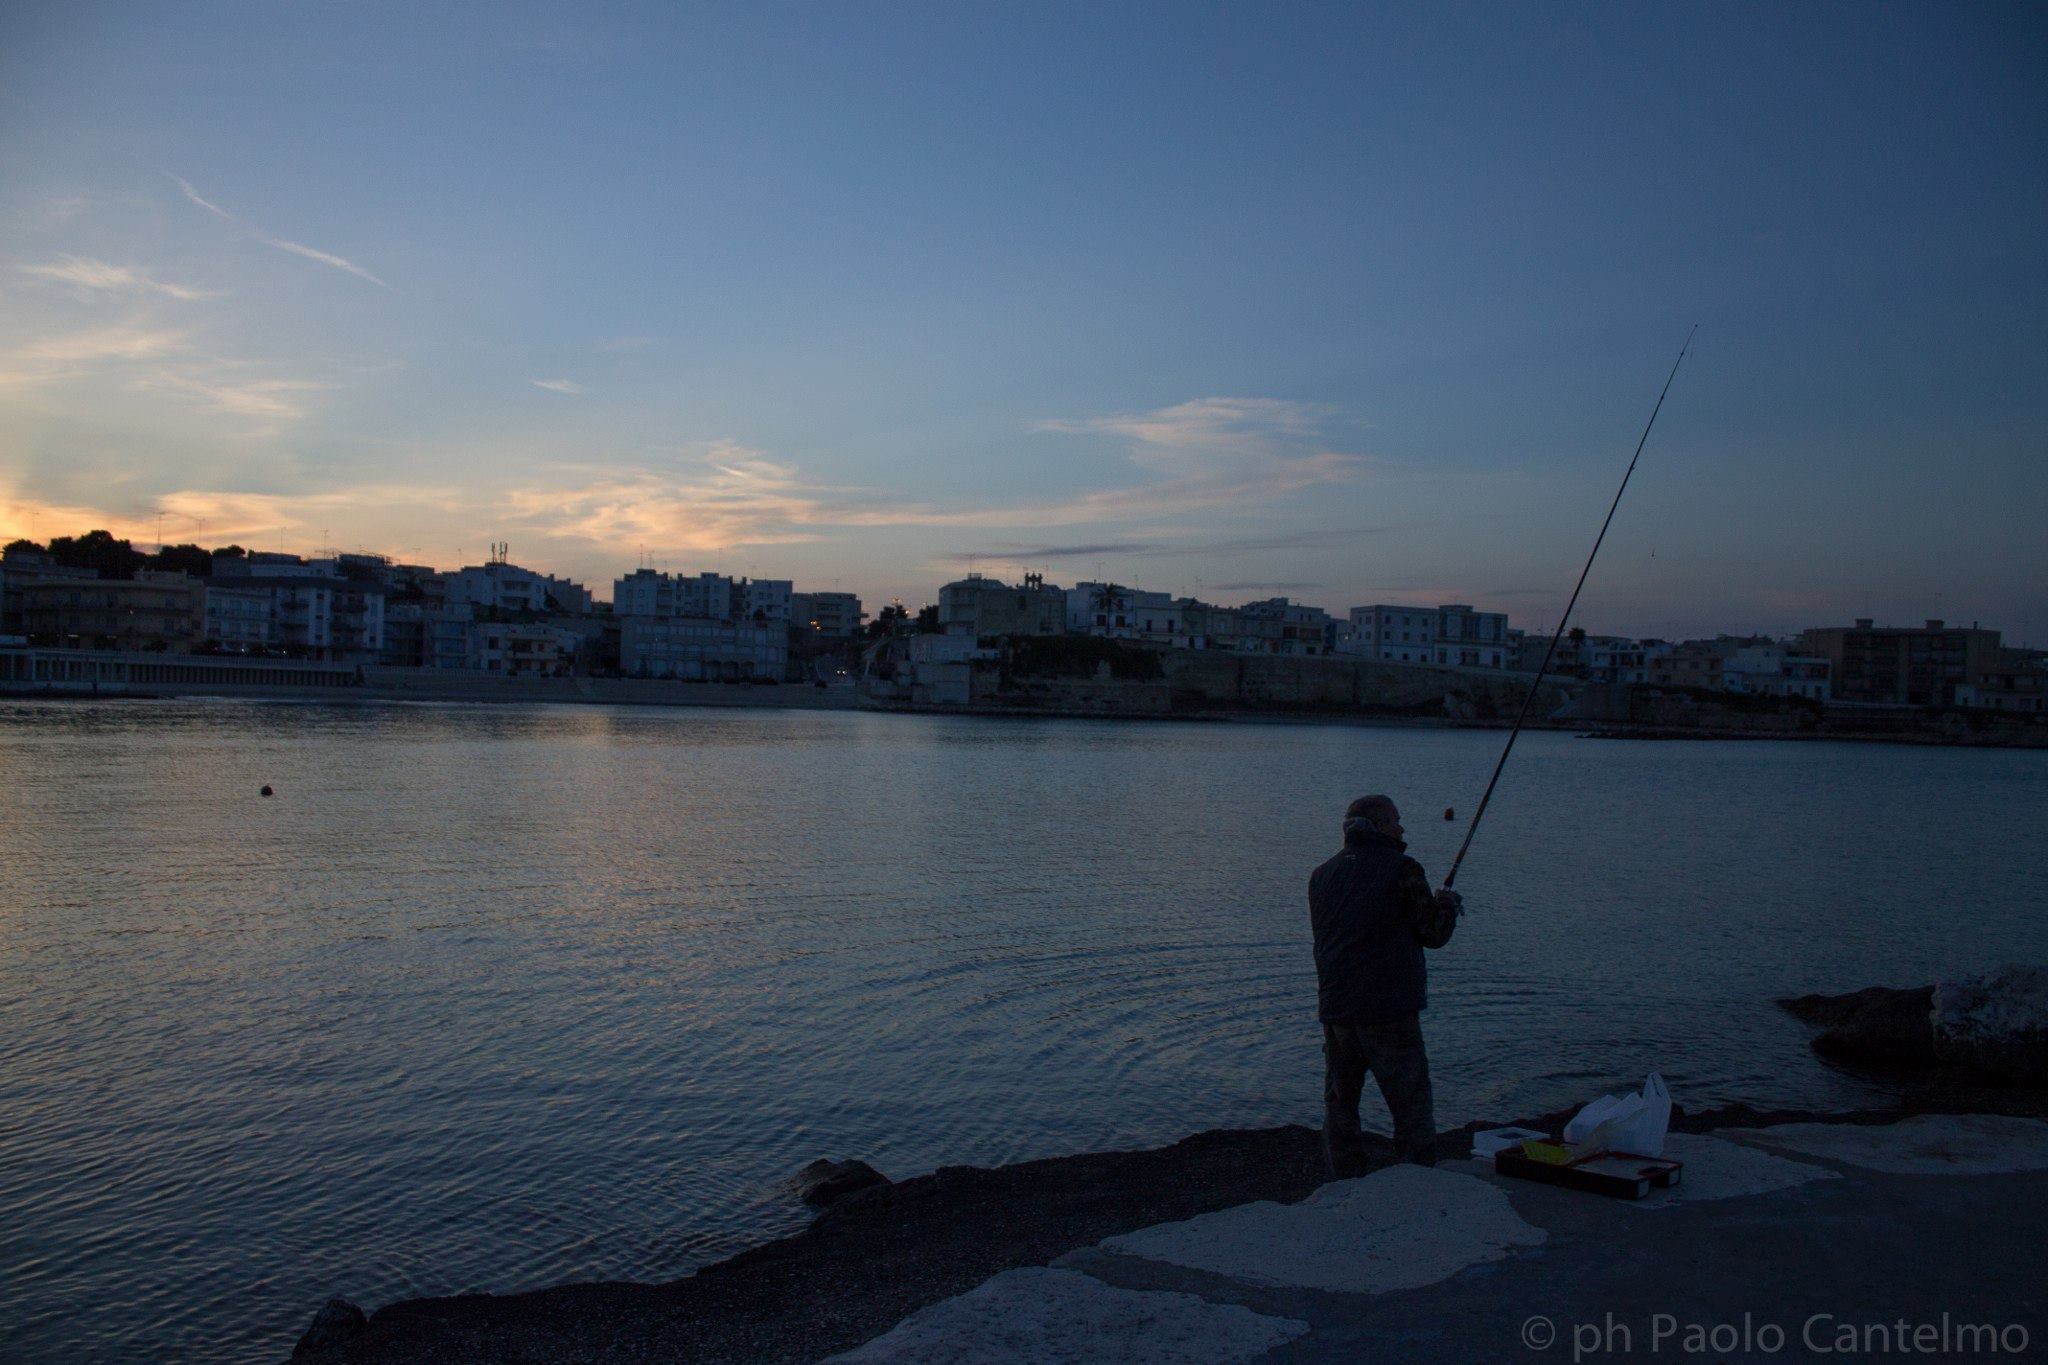 last sun at dawn had dozed off a fisherman...